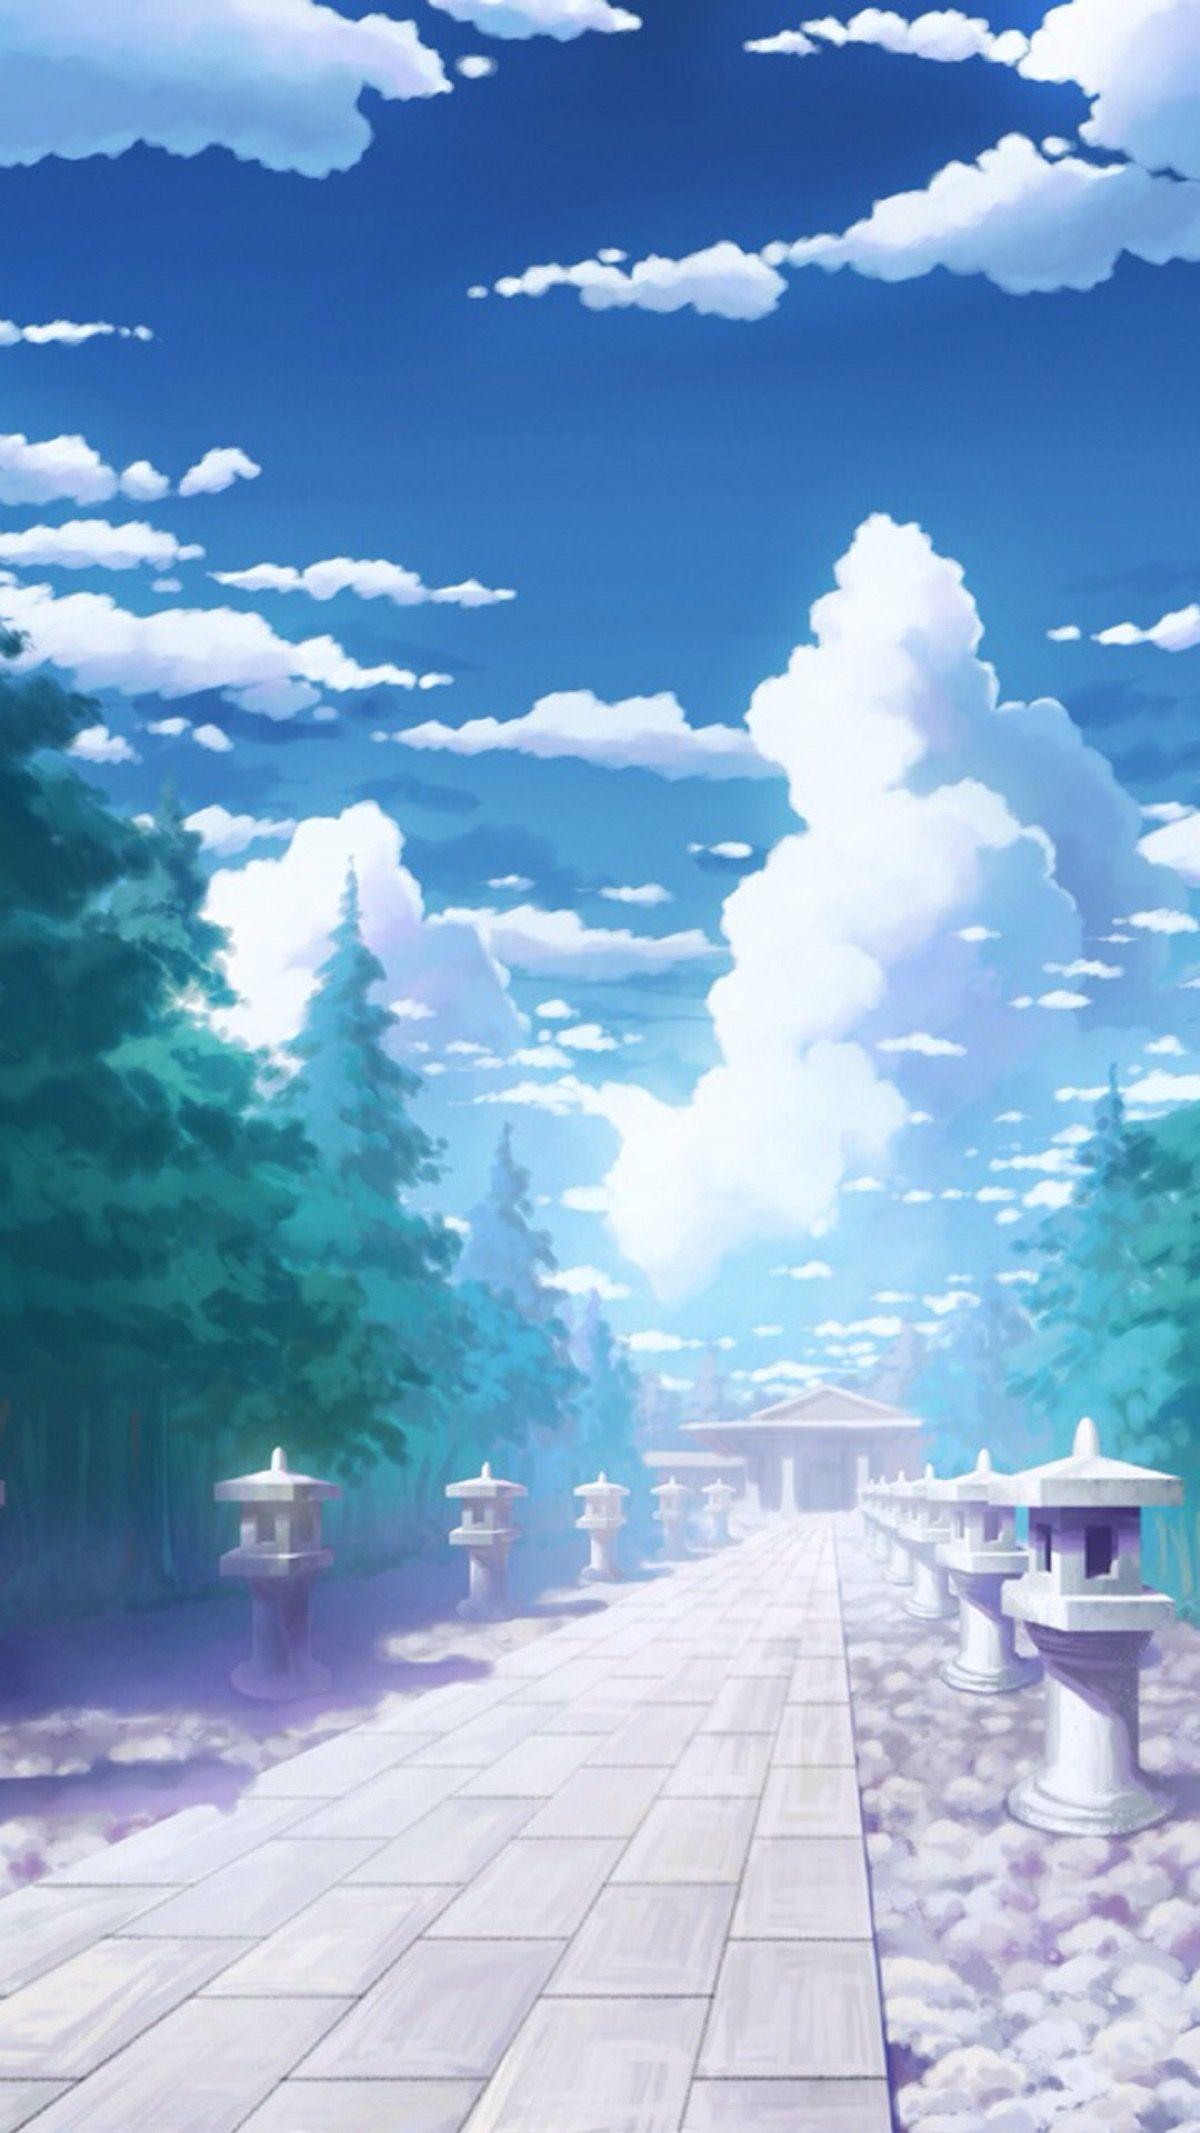 Anime Art Night Sky Scenery Wallpaper iPhone Phone 4K 1400f